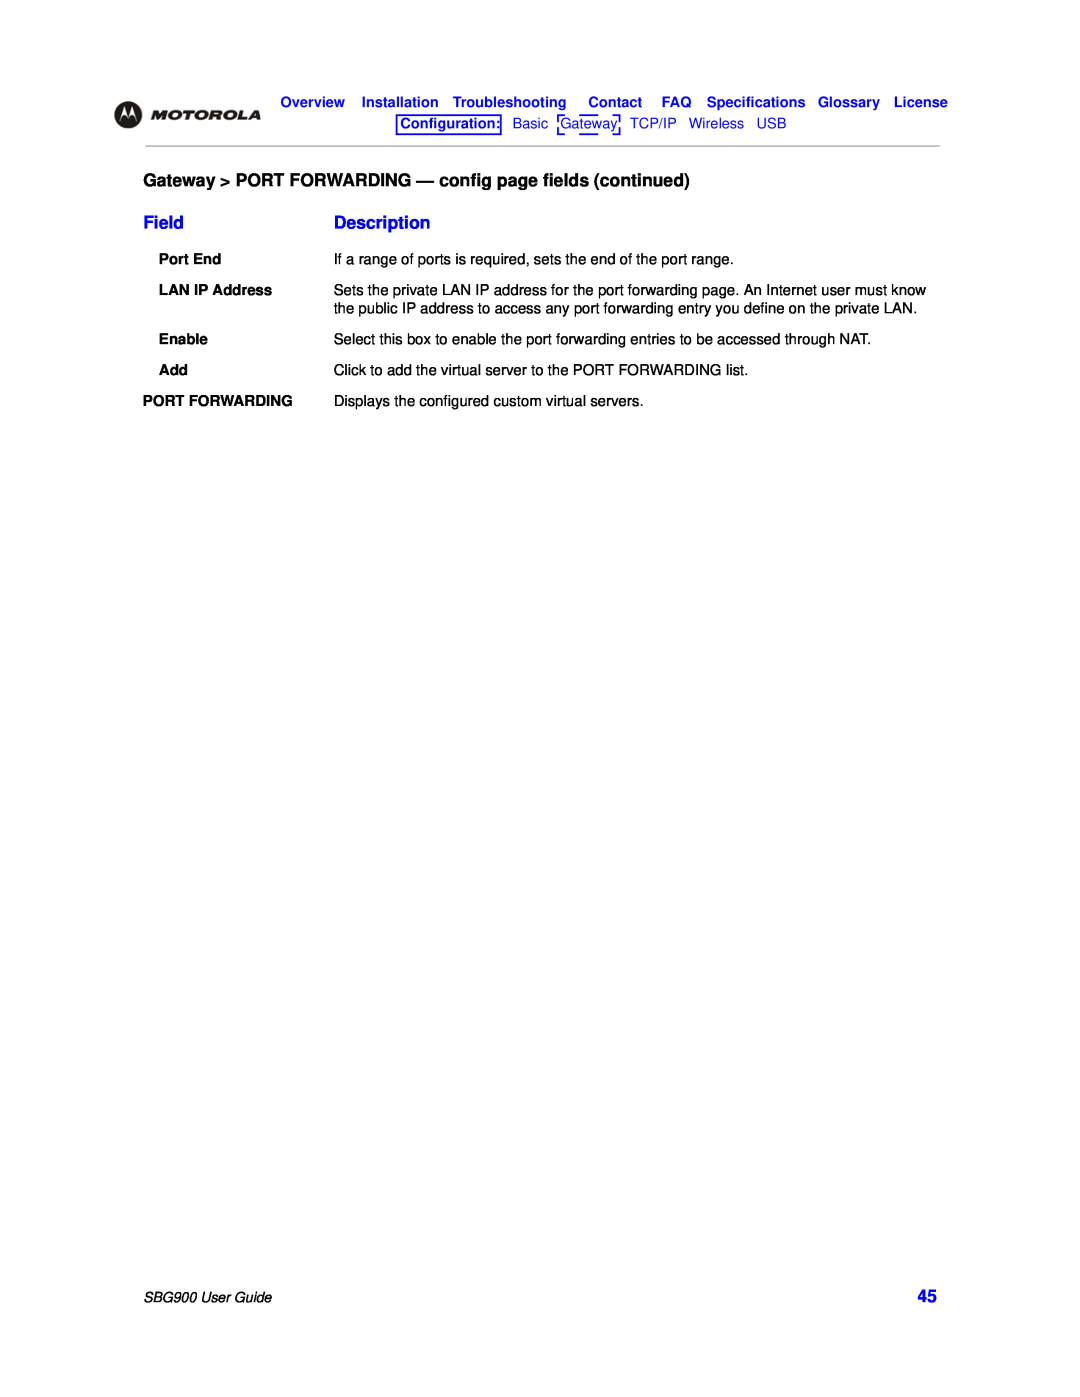 Motorola manual Gateway PORT FORWARDING - config page fields continued, Field, Description, SBG900 User Guide 